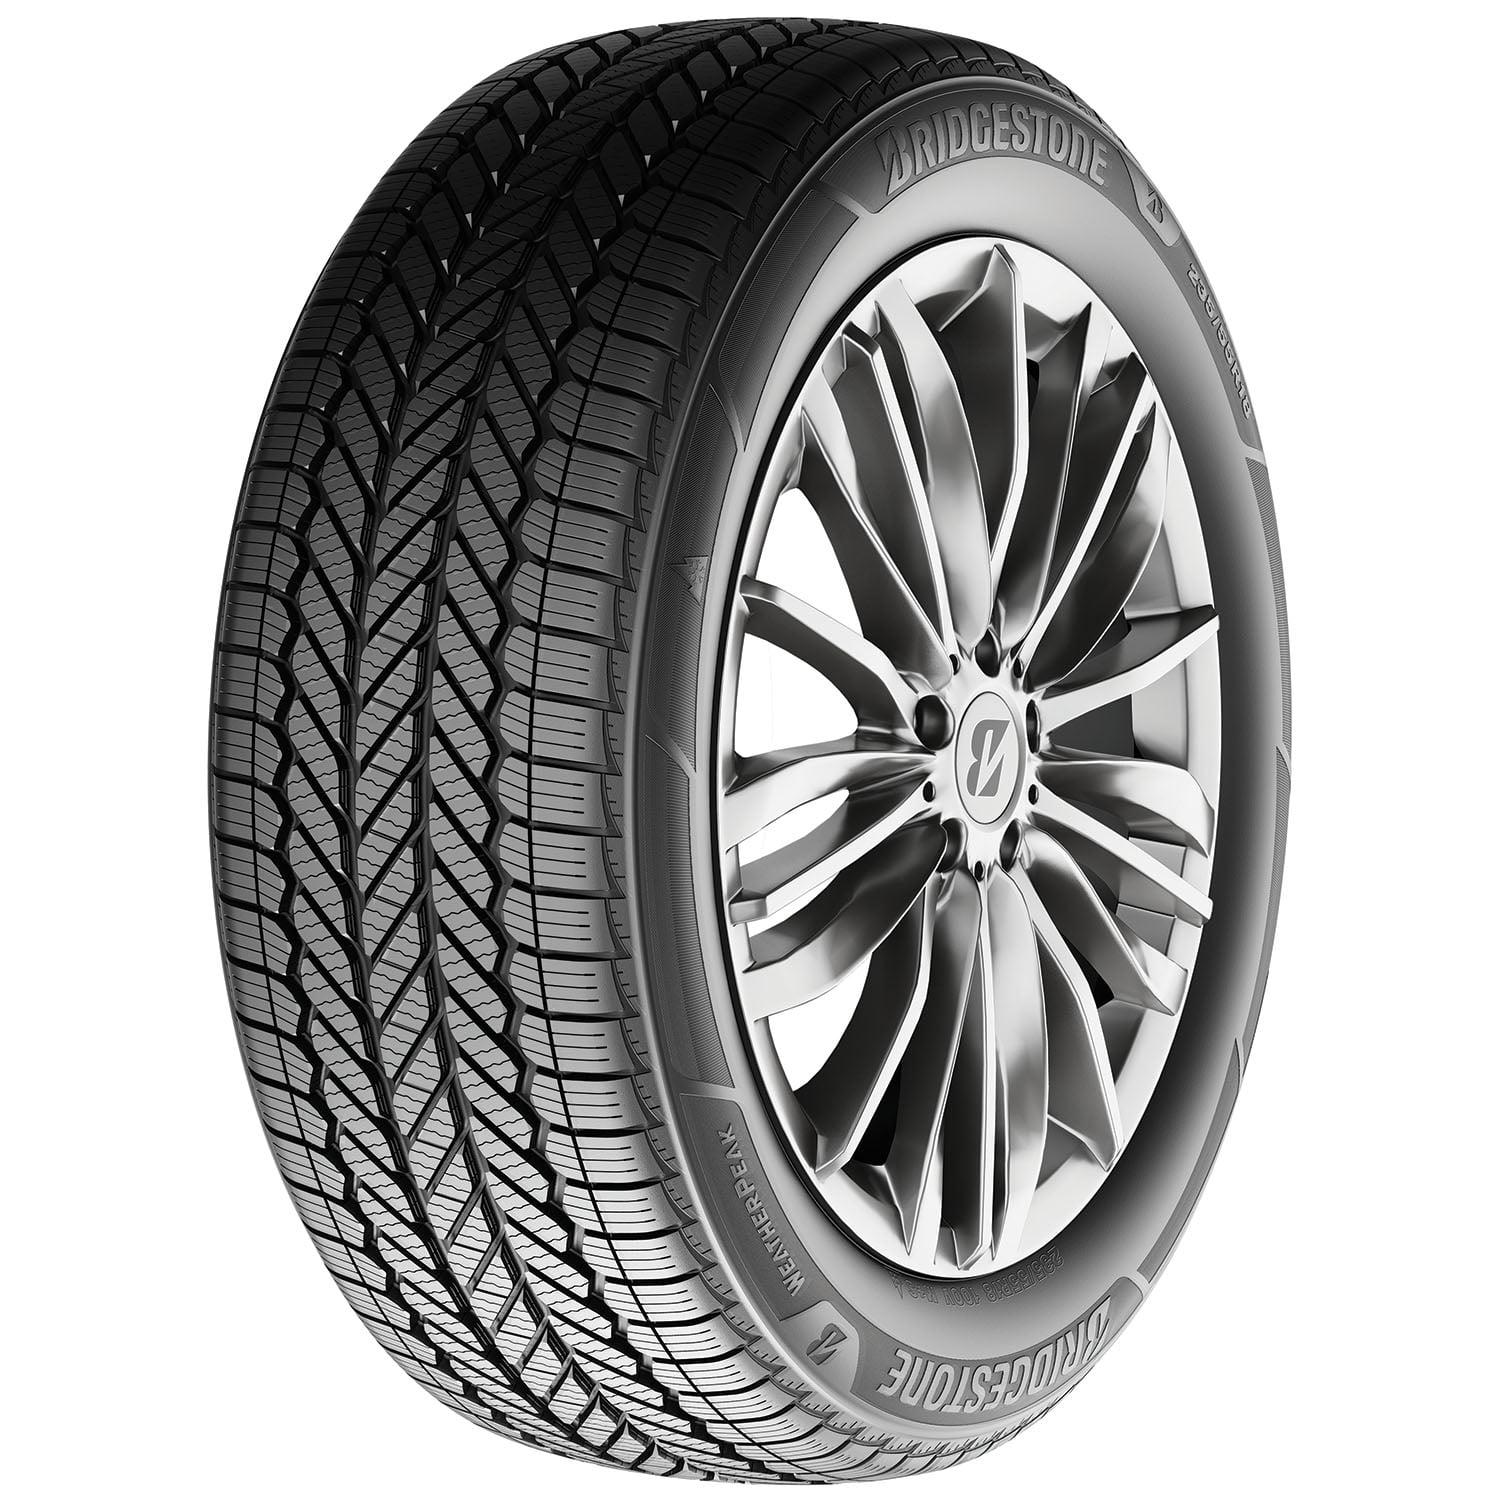 Bridgestone Weatherpeak 185/55R15 82V Highway Terrain Passenger Car Tires